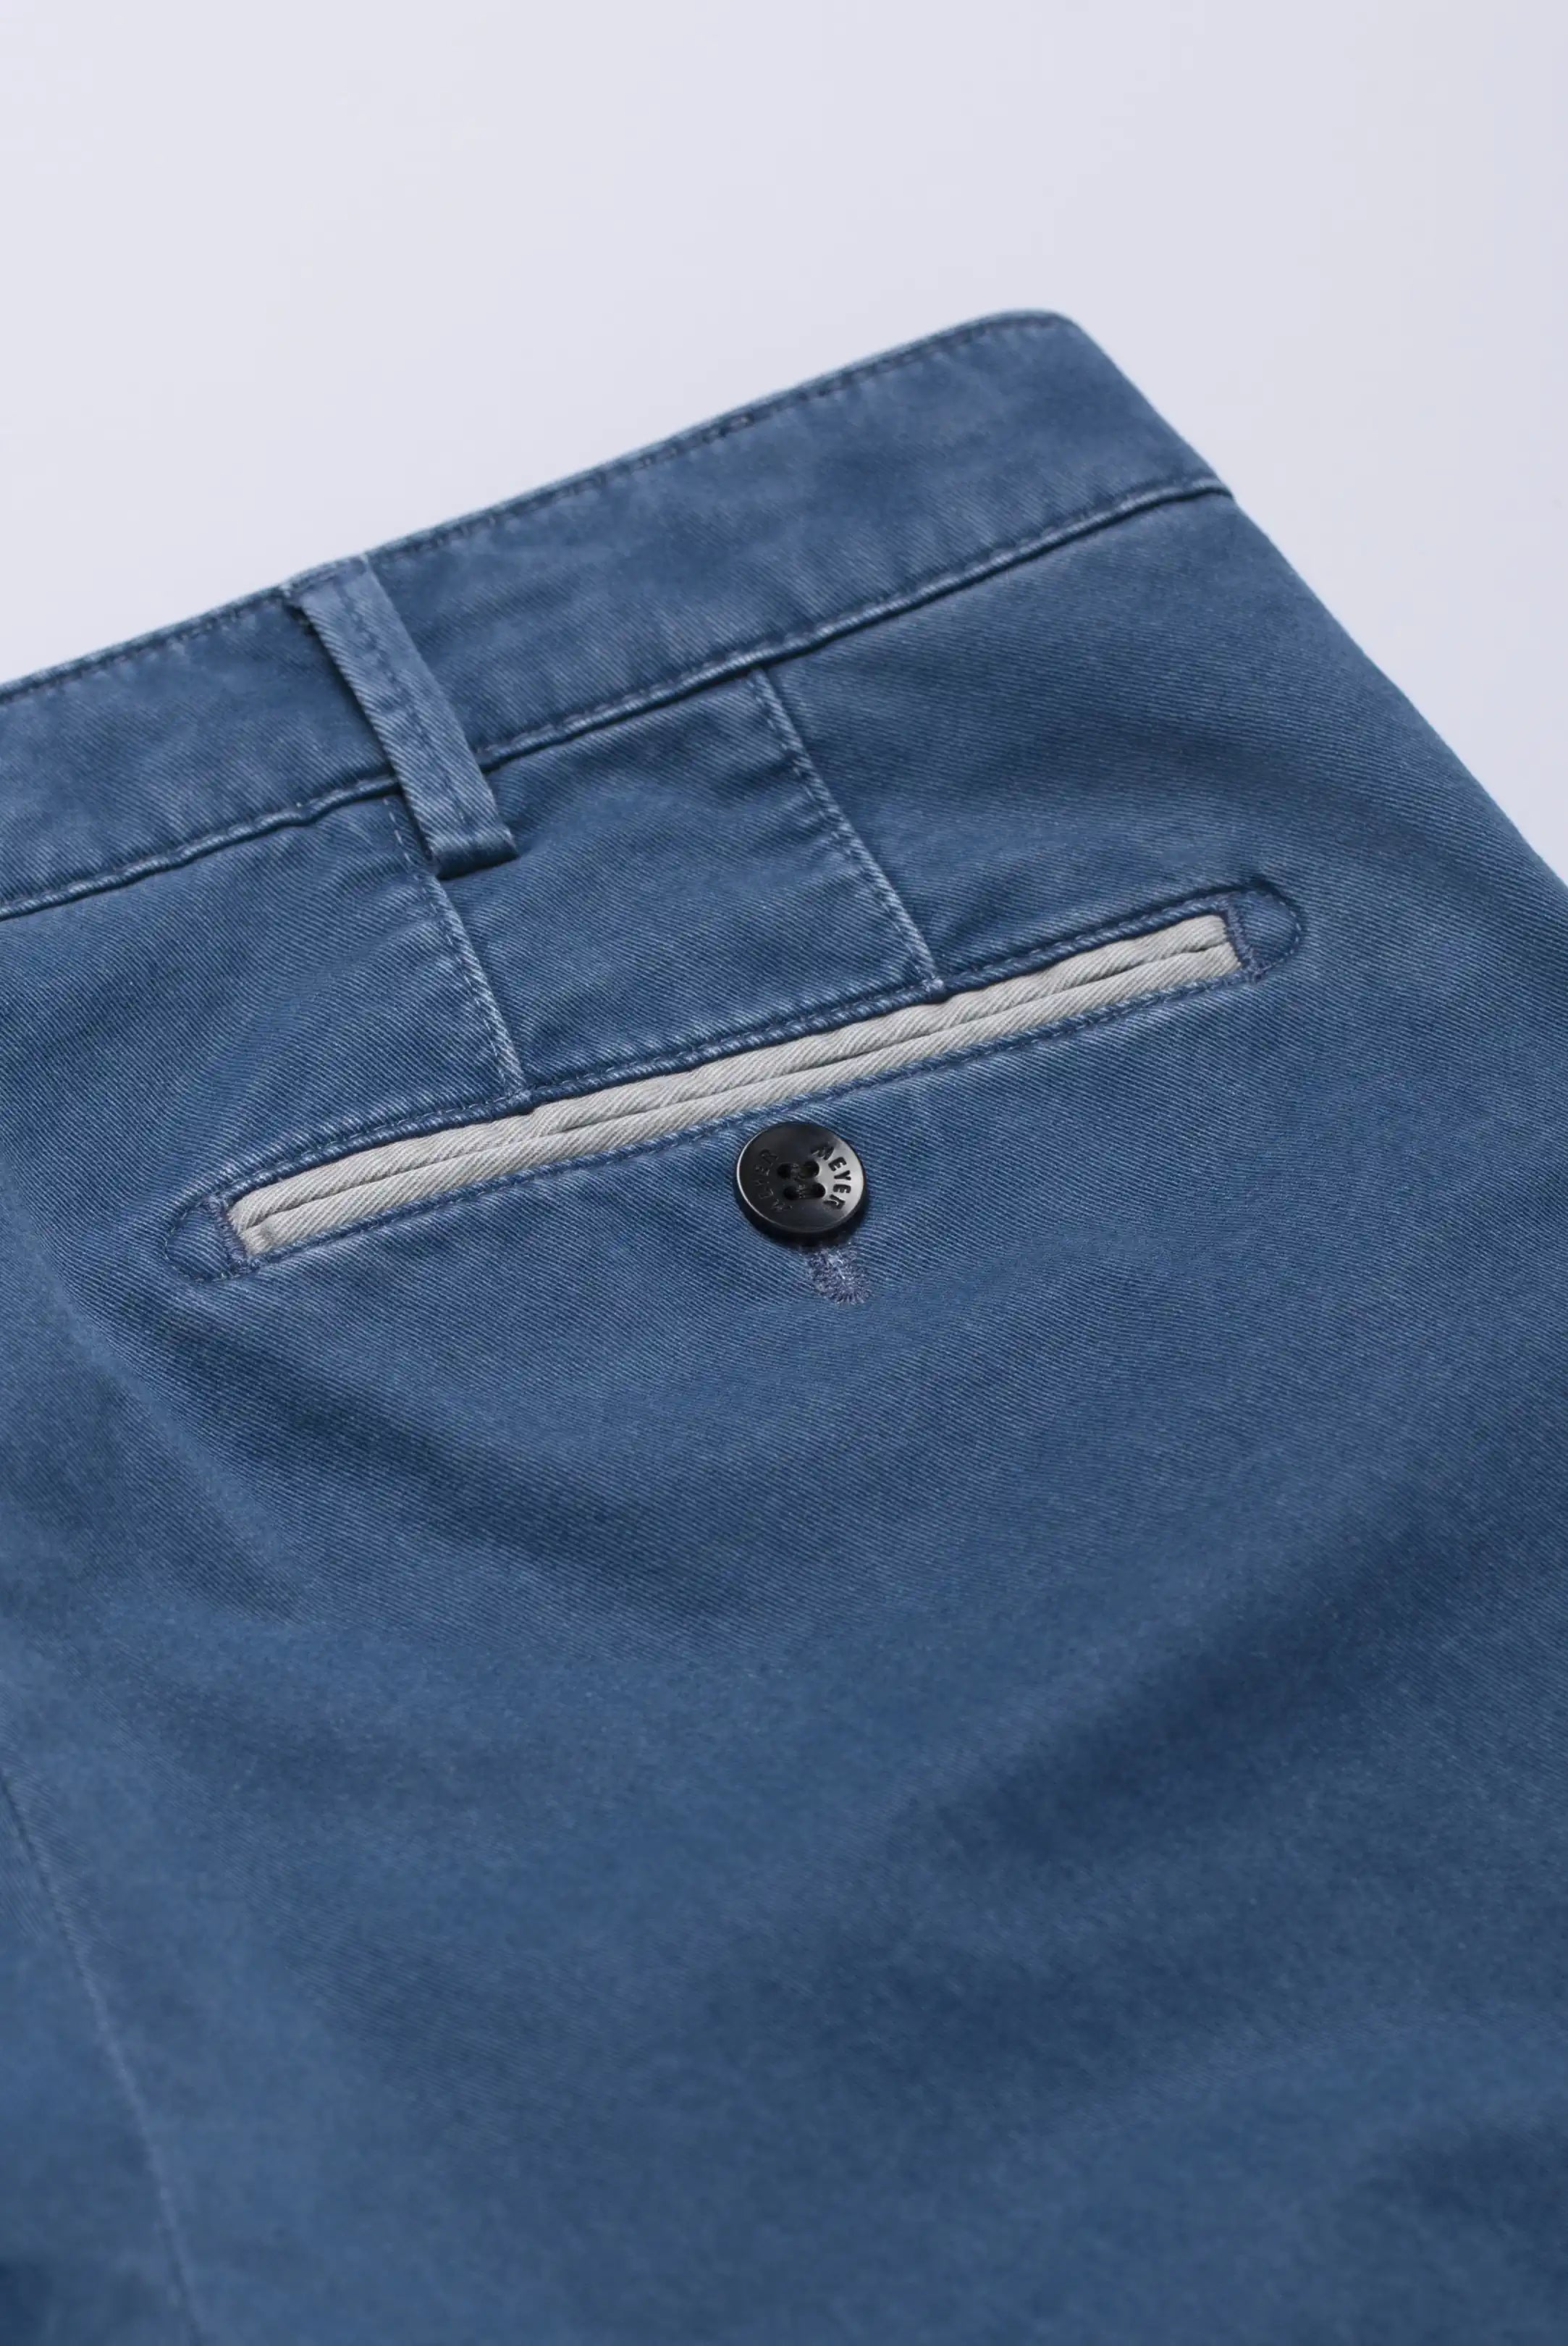 MEYER New York Trousers - 5000 Soft Twill Chino - Blue